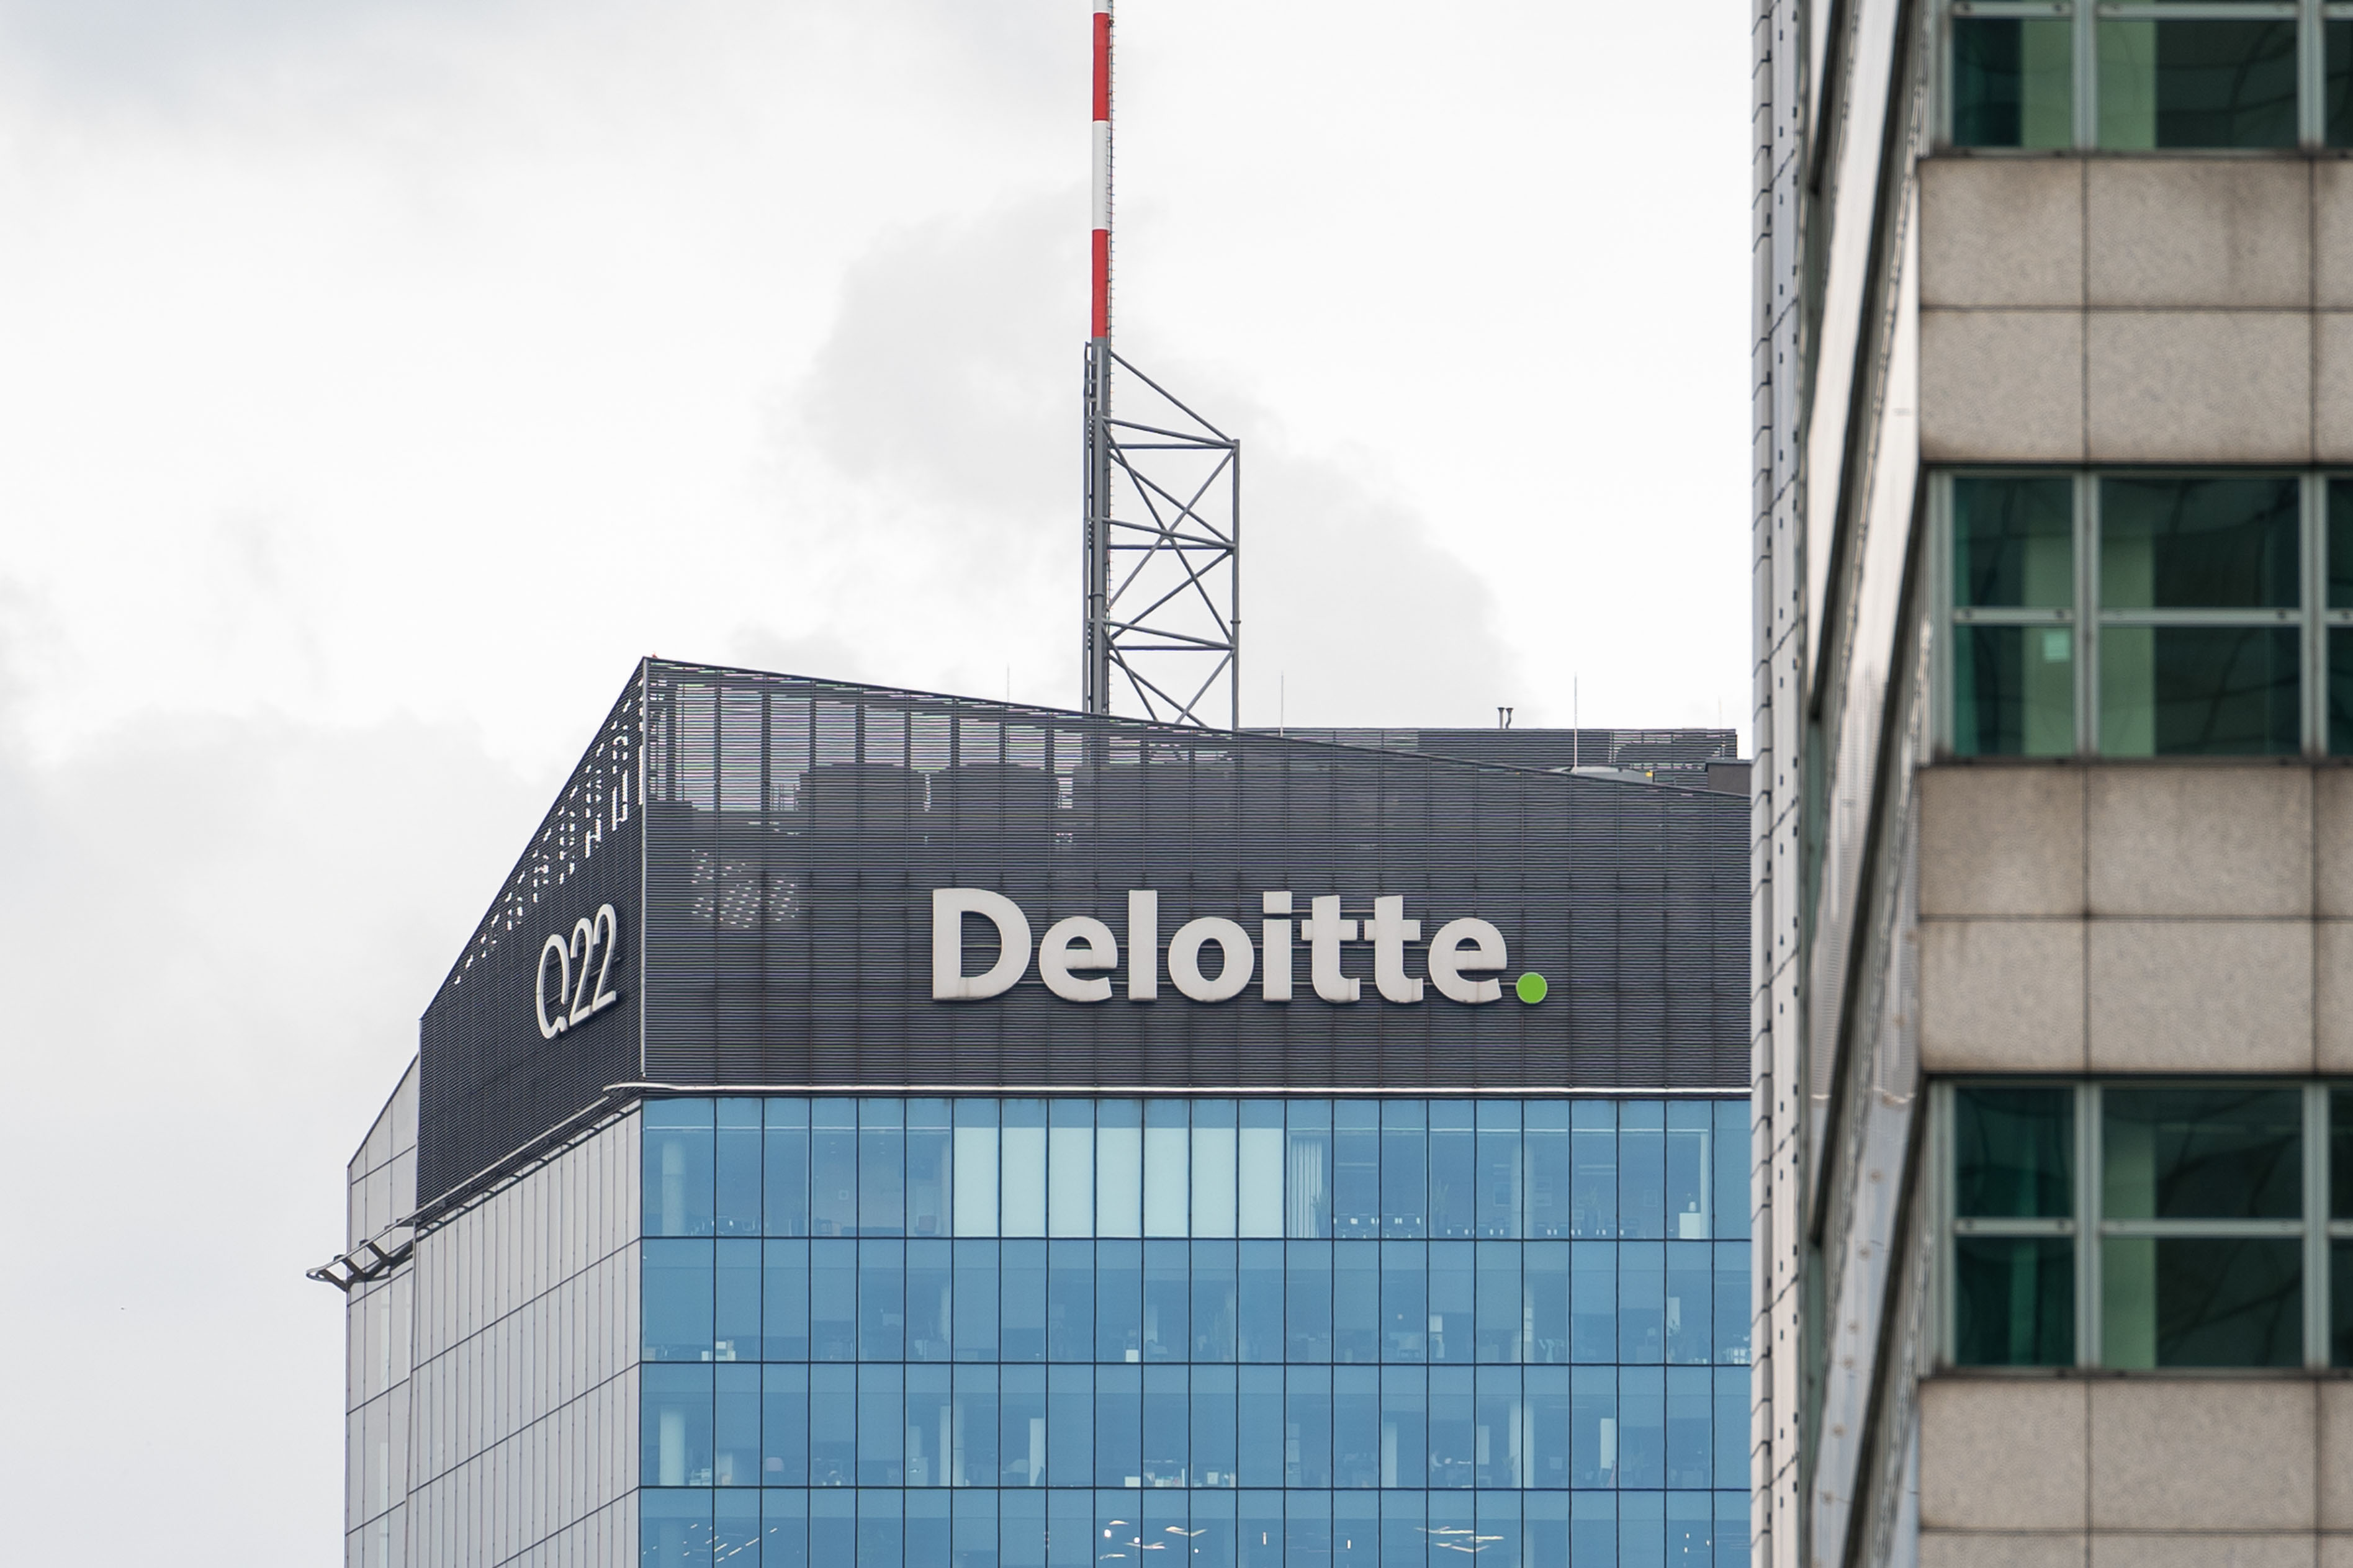 The Deloitte logo is seen on a skyscraper building in Warsaw, Poland.